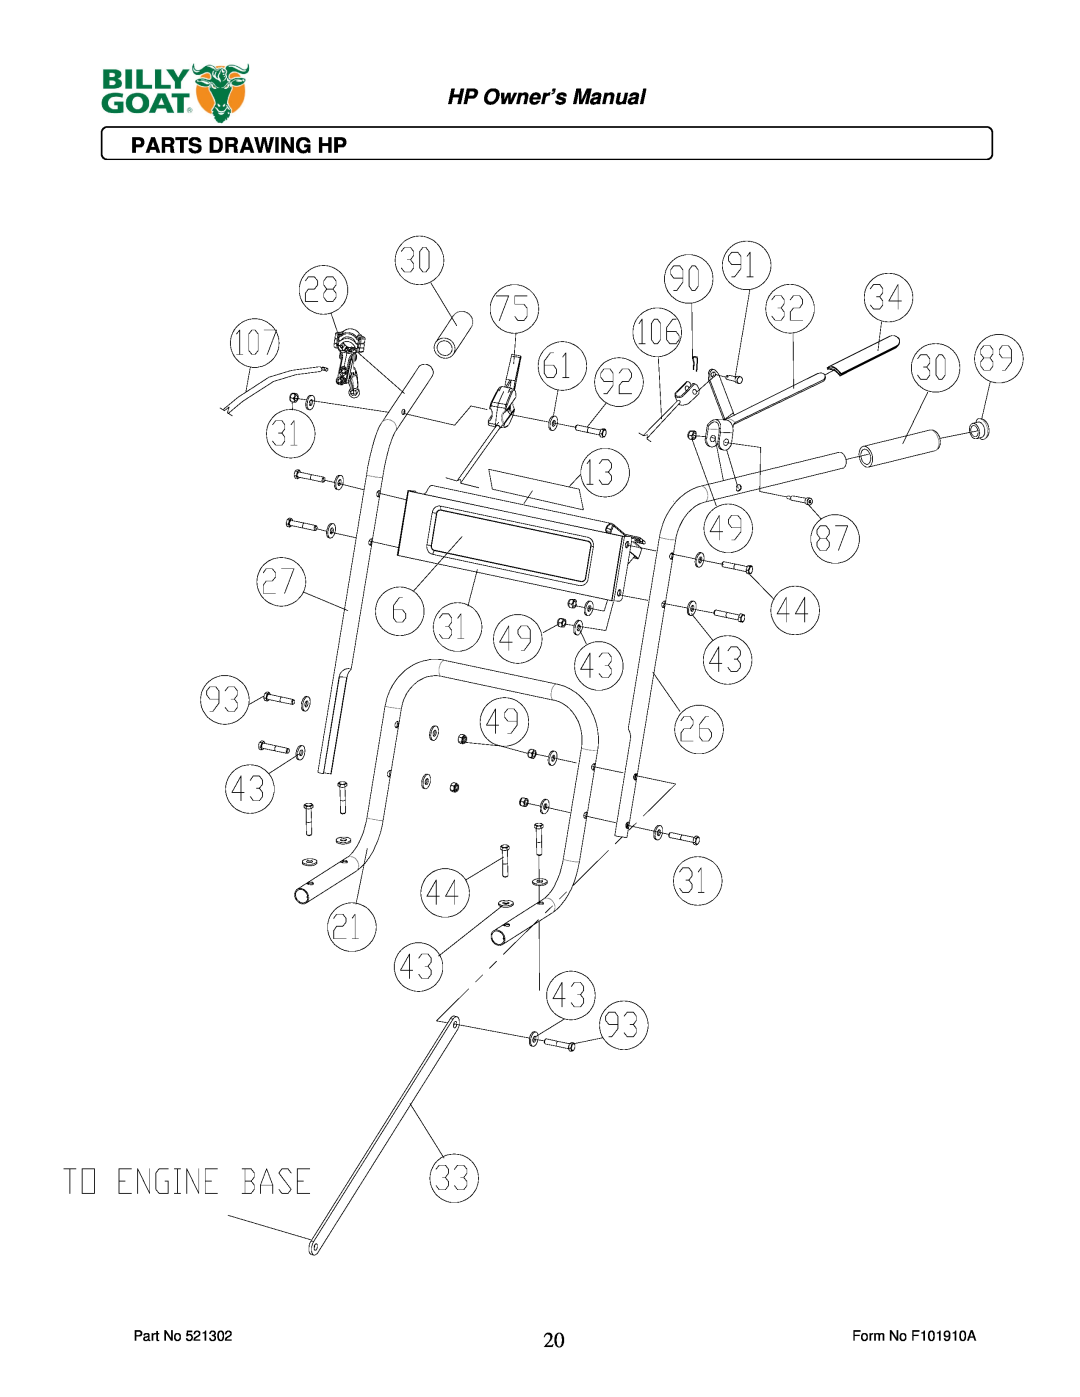 Billy Goat HP3400 owner manual HP Owner’s Manual, Parts Drawing Hp 